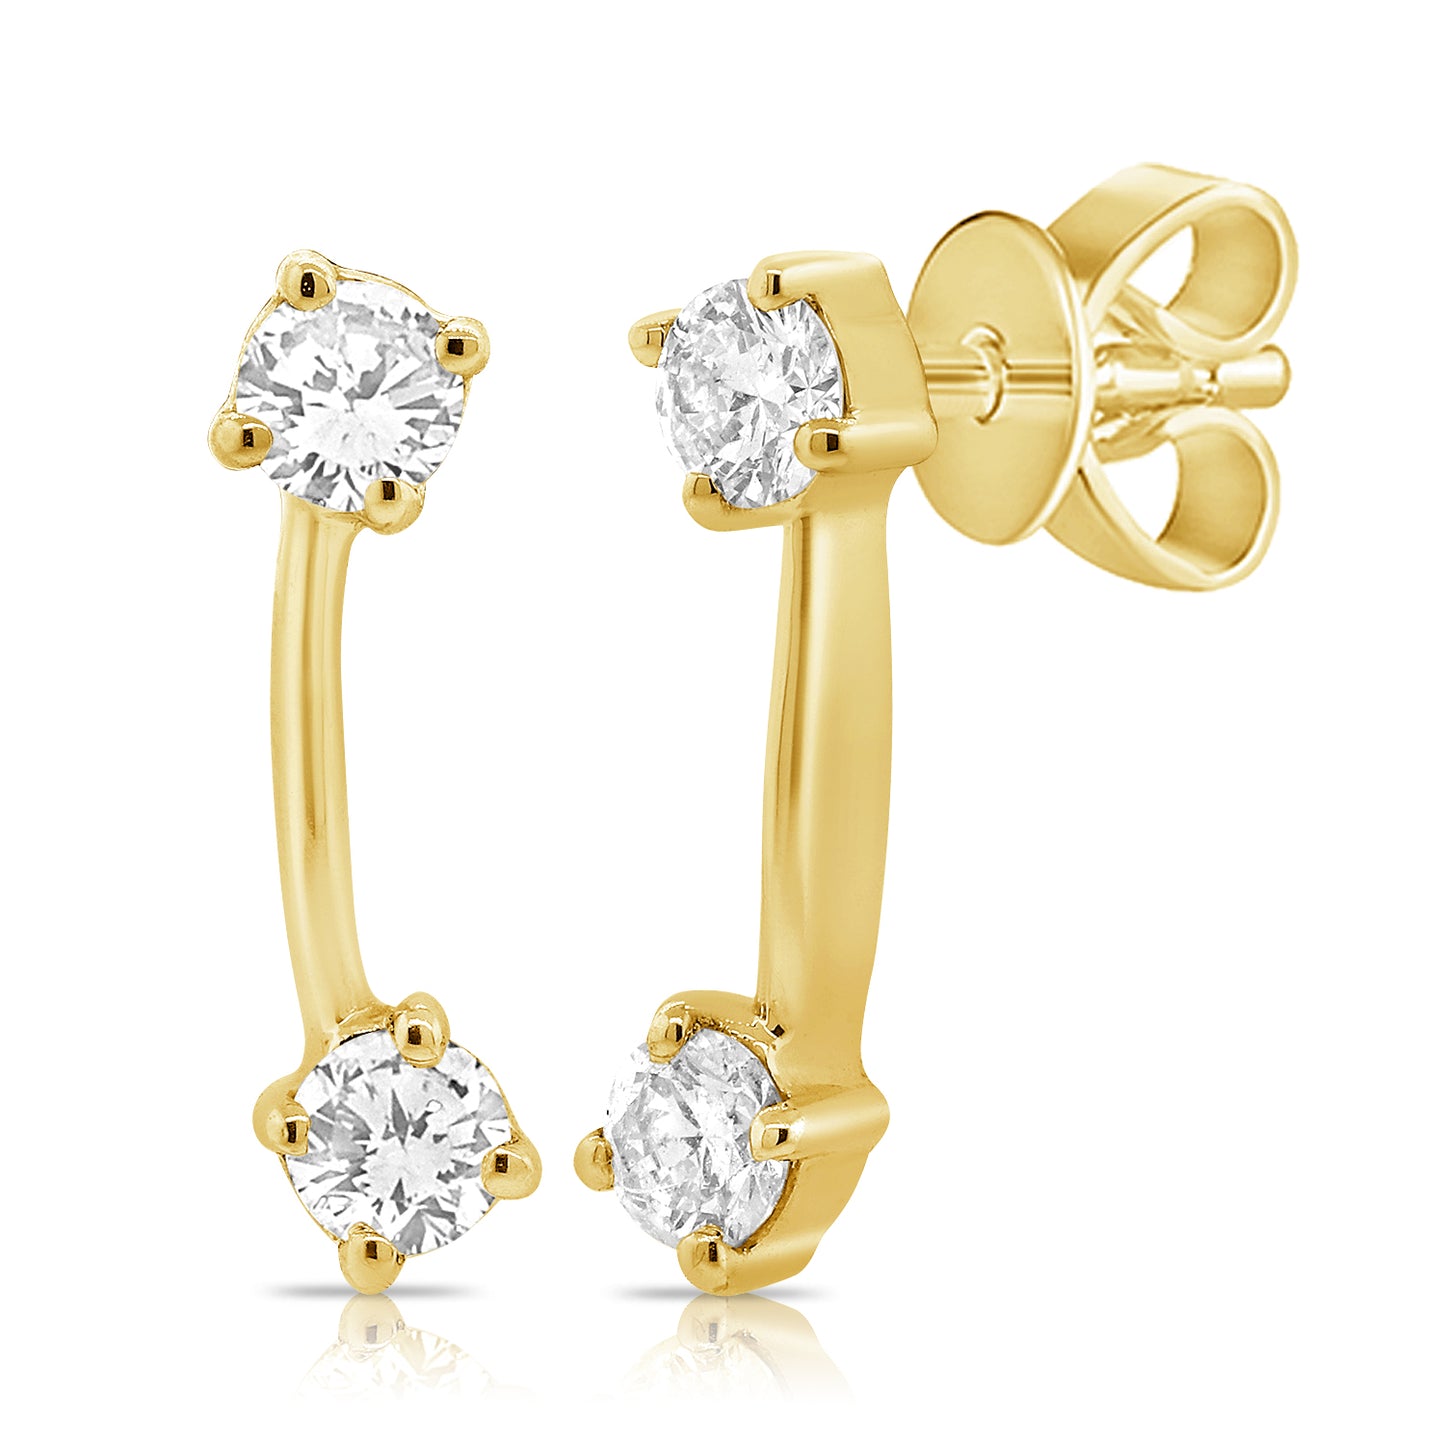 2 Diamond & Curved Gold Bar Earrings